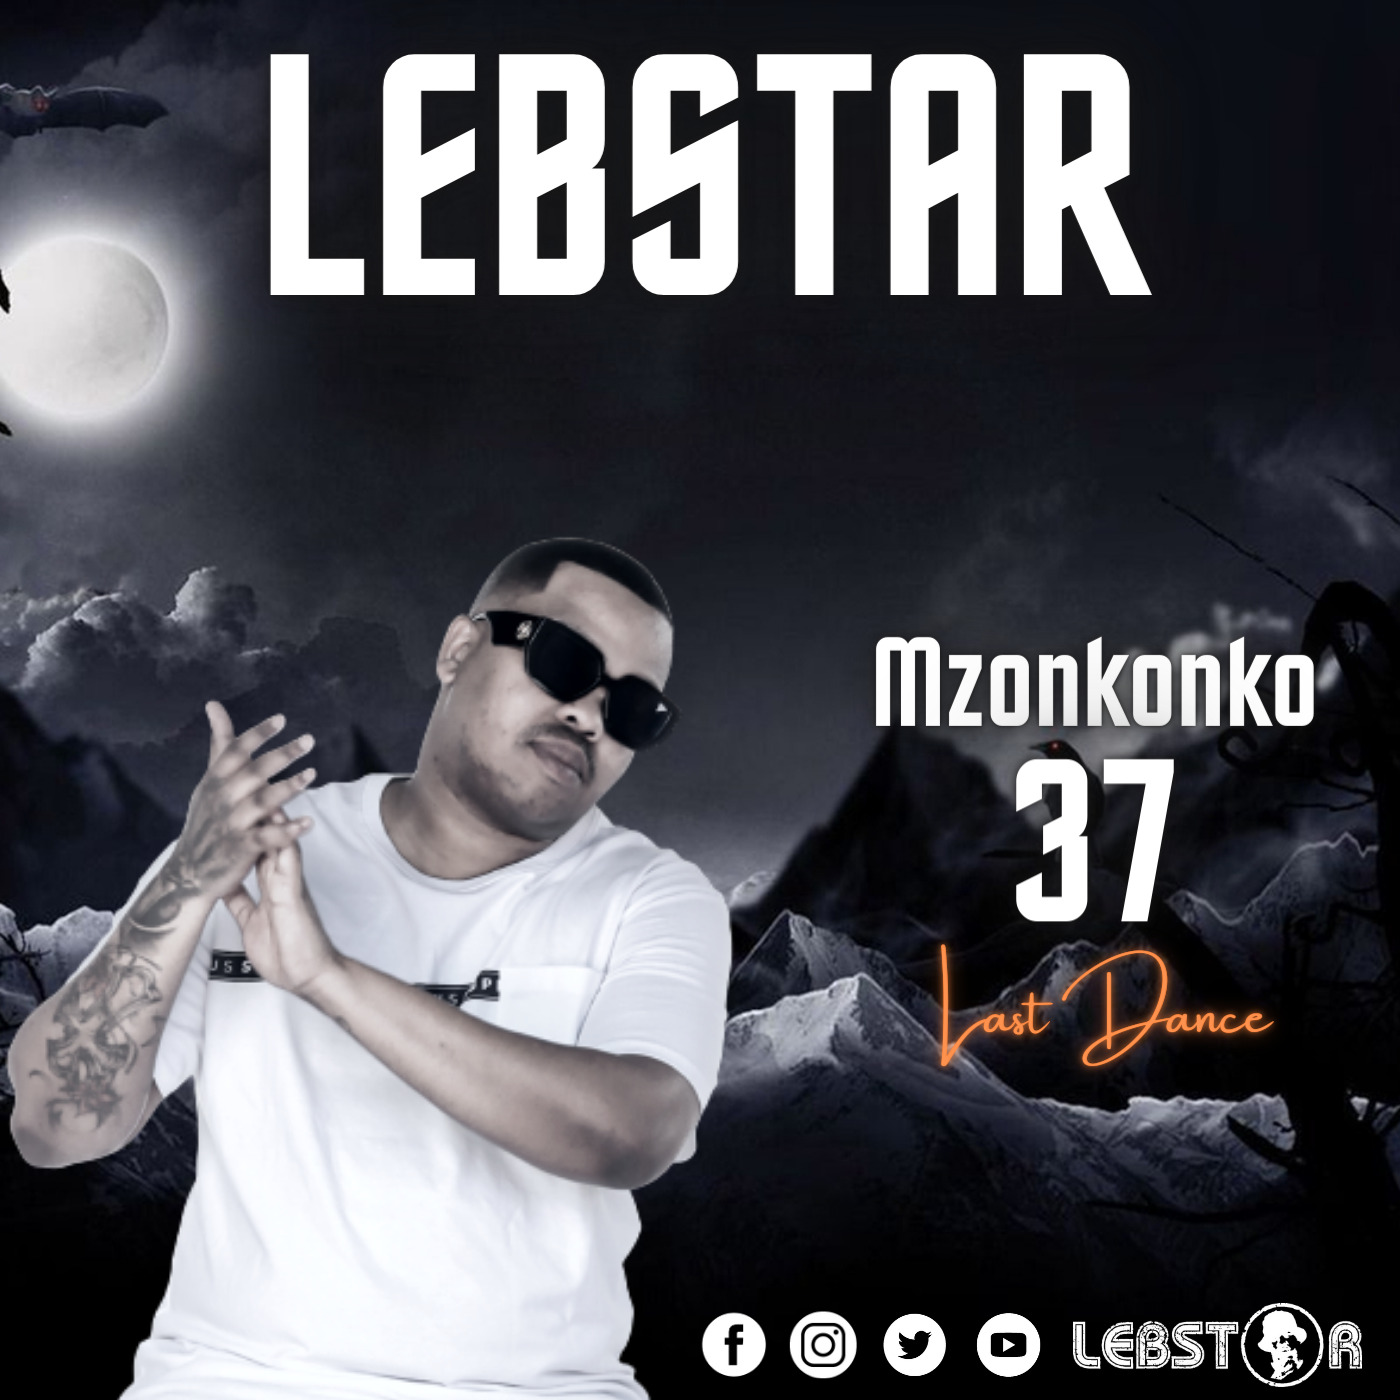 Mzonkonko 37 (Last Dance)